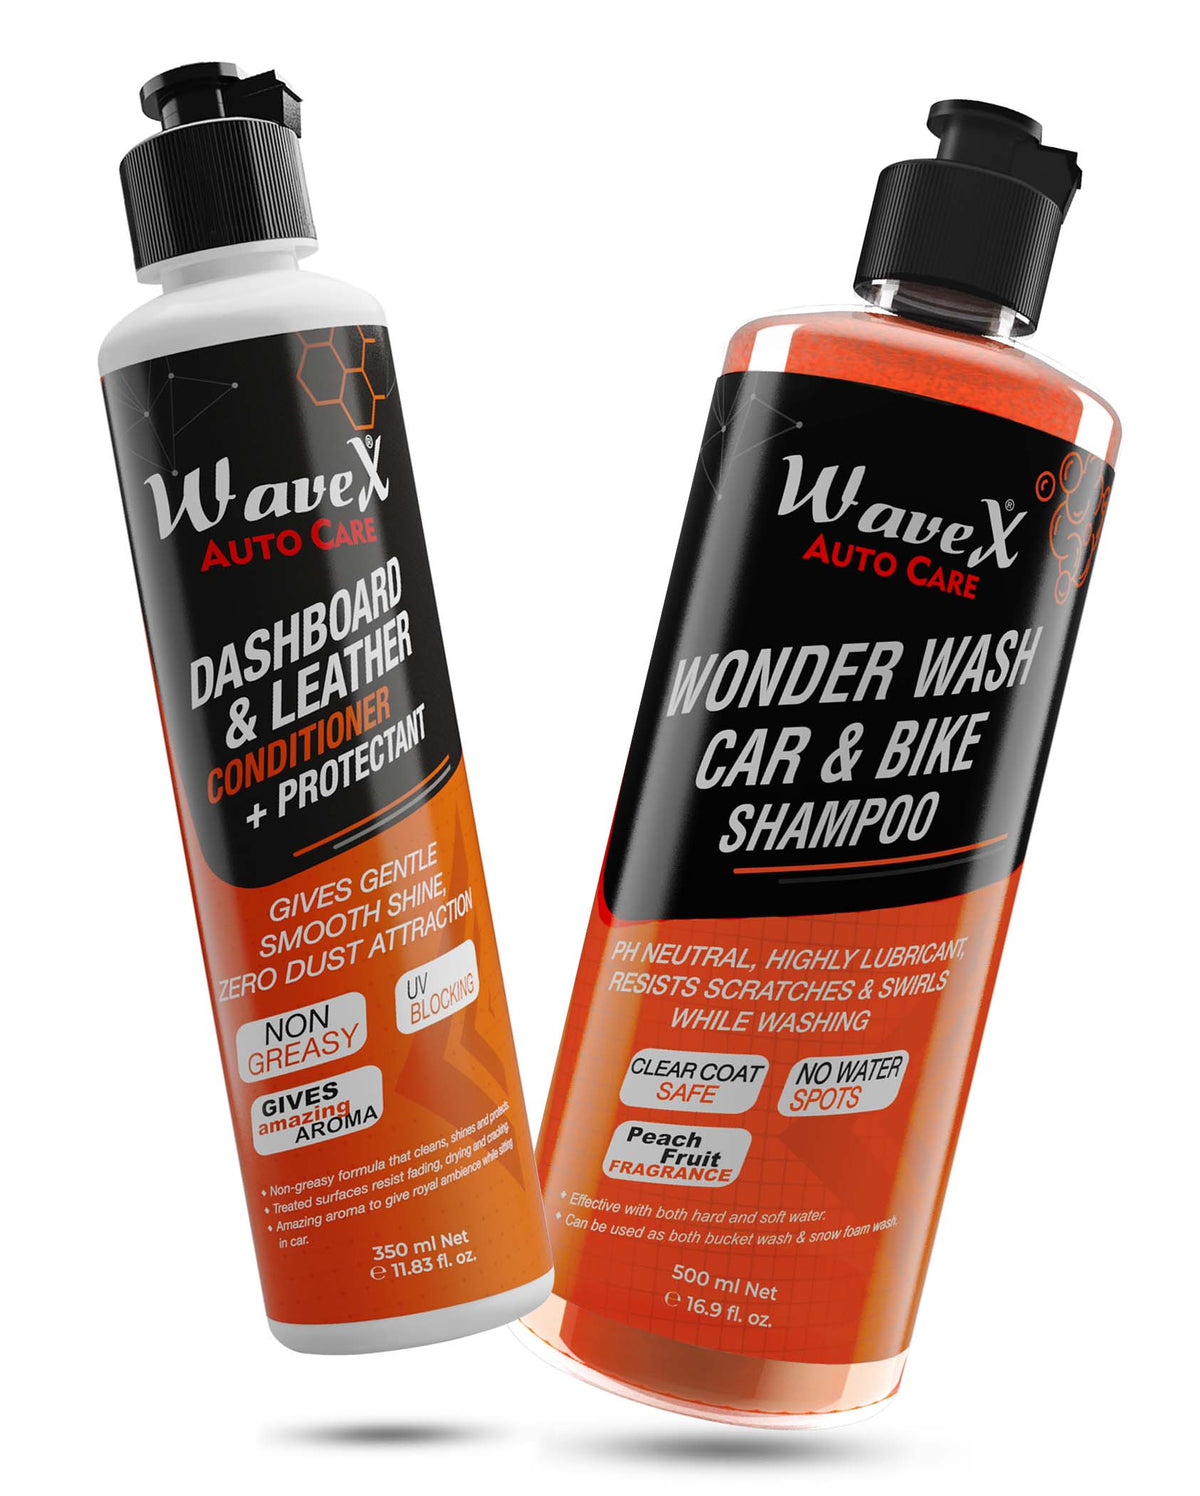 Wonder Wash Car & Bike Shampoo 500ml + Dashboard and Leather Conditioner Protectant 350ml